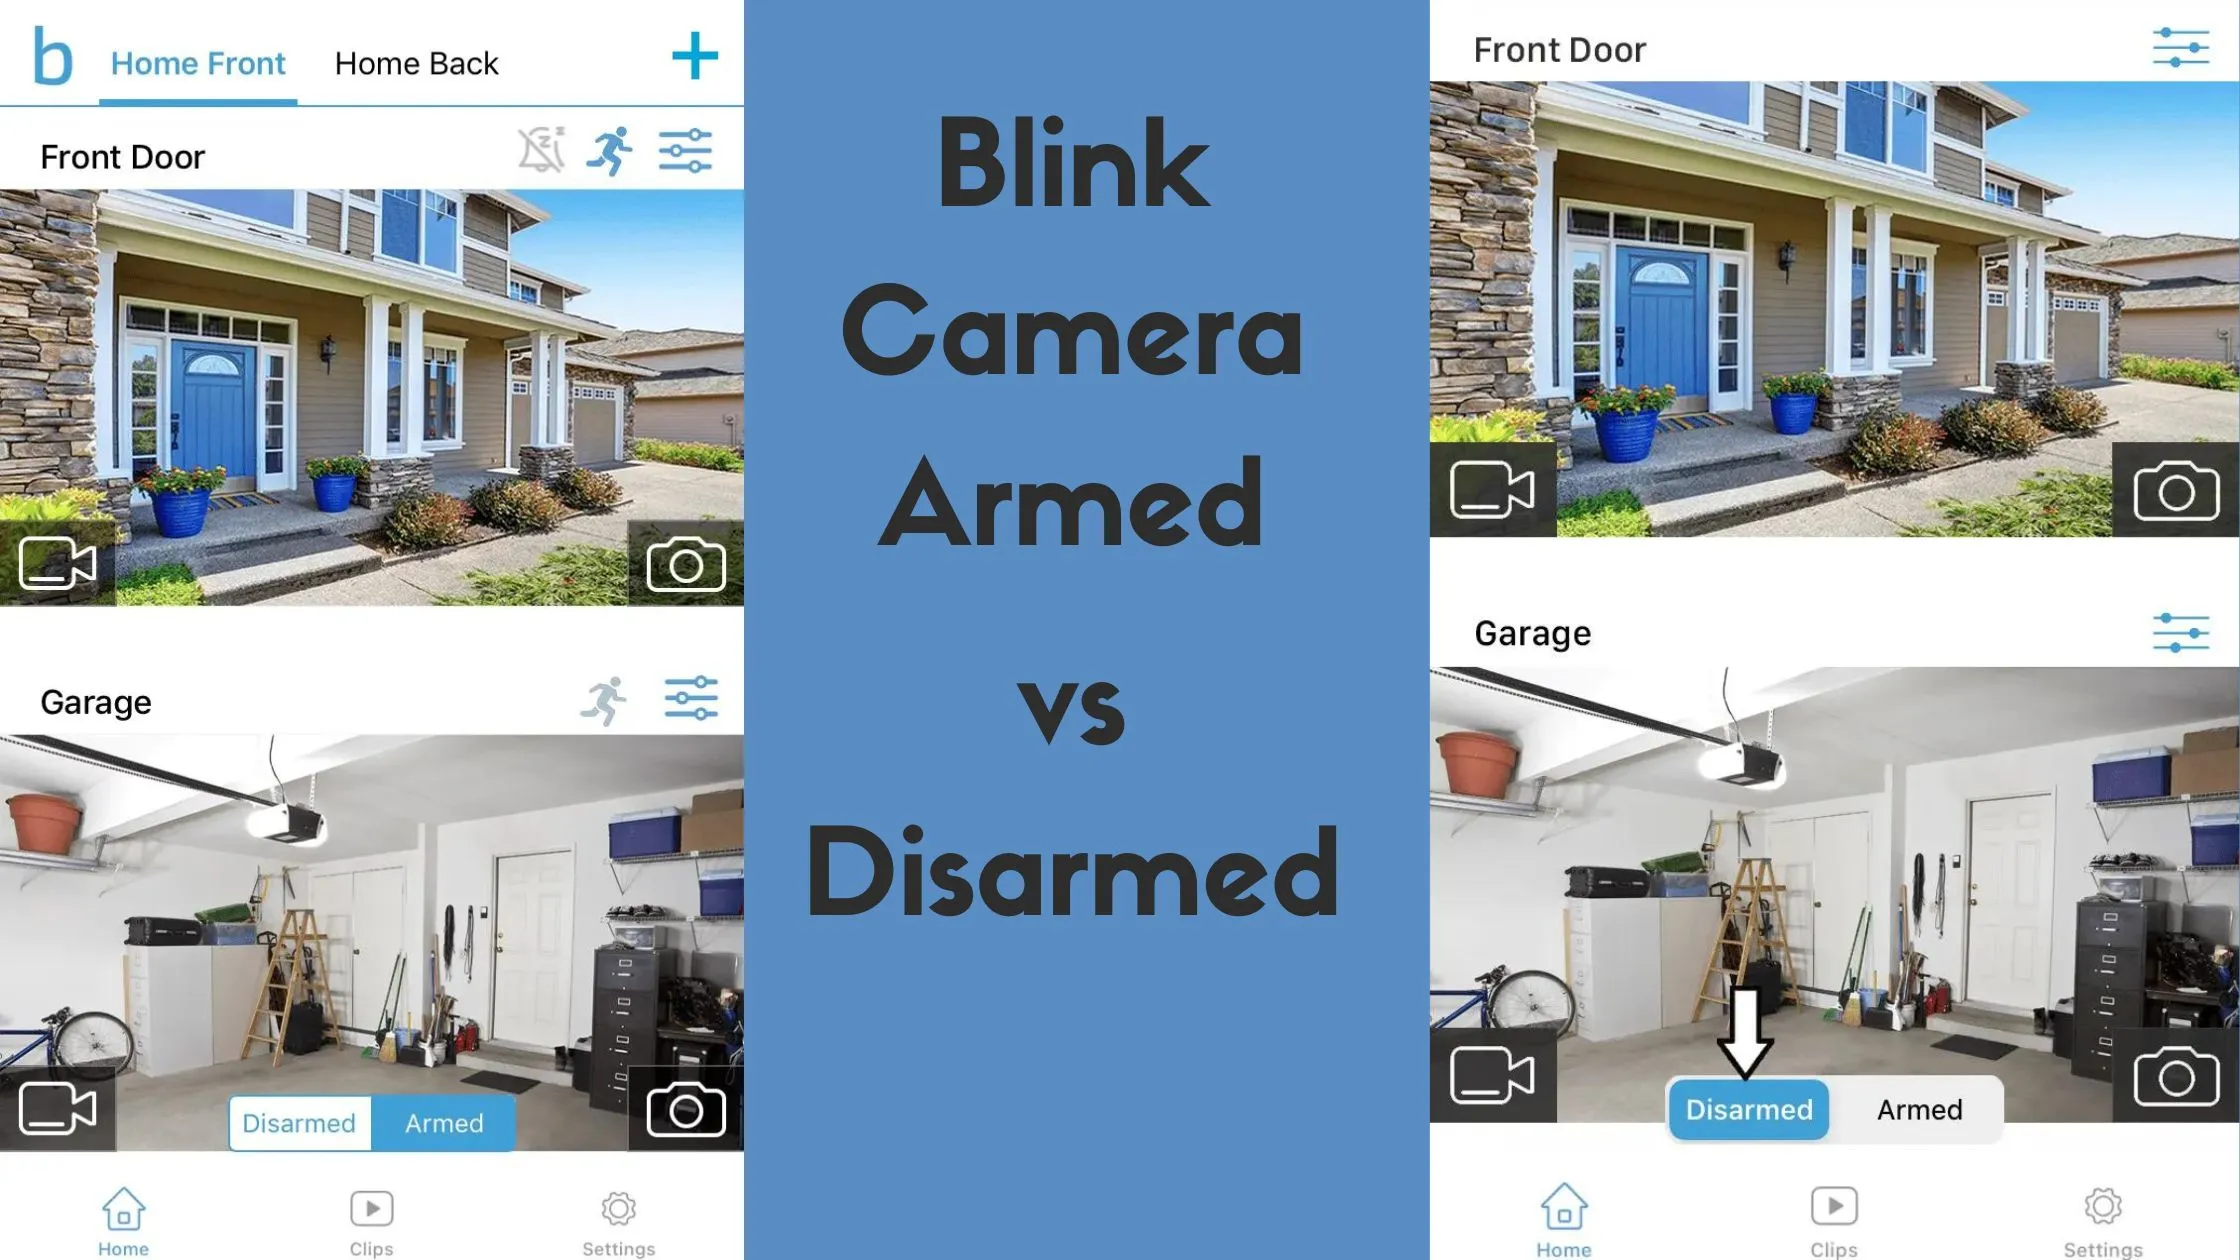 Blink camera armed vs disarmed